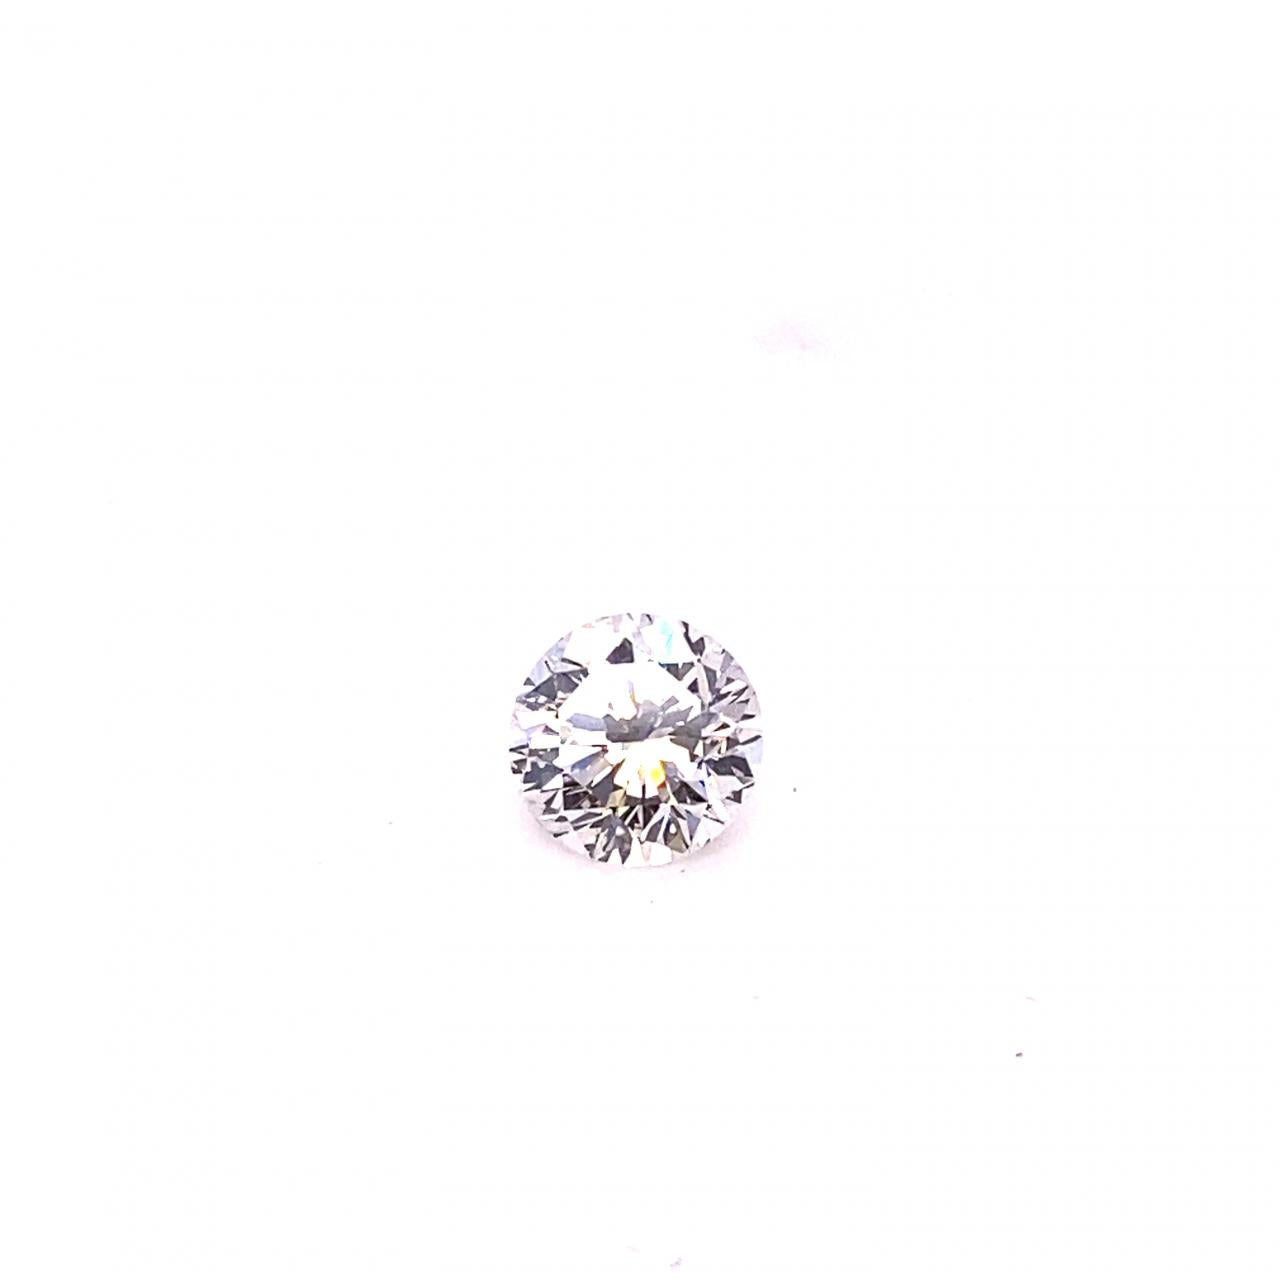 1.12 Carat Round Brilliant Cut Loose Diamond with GIA